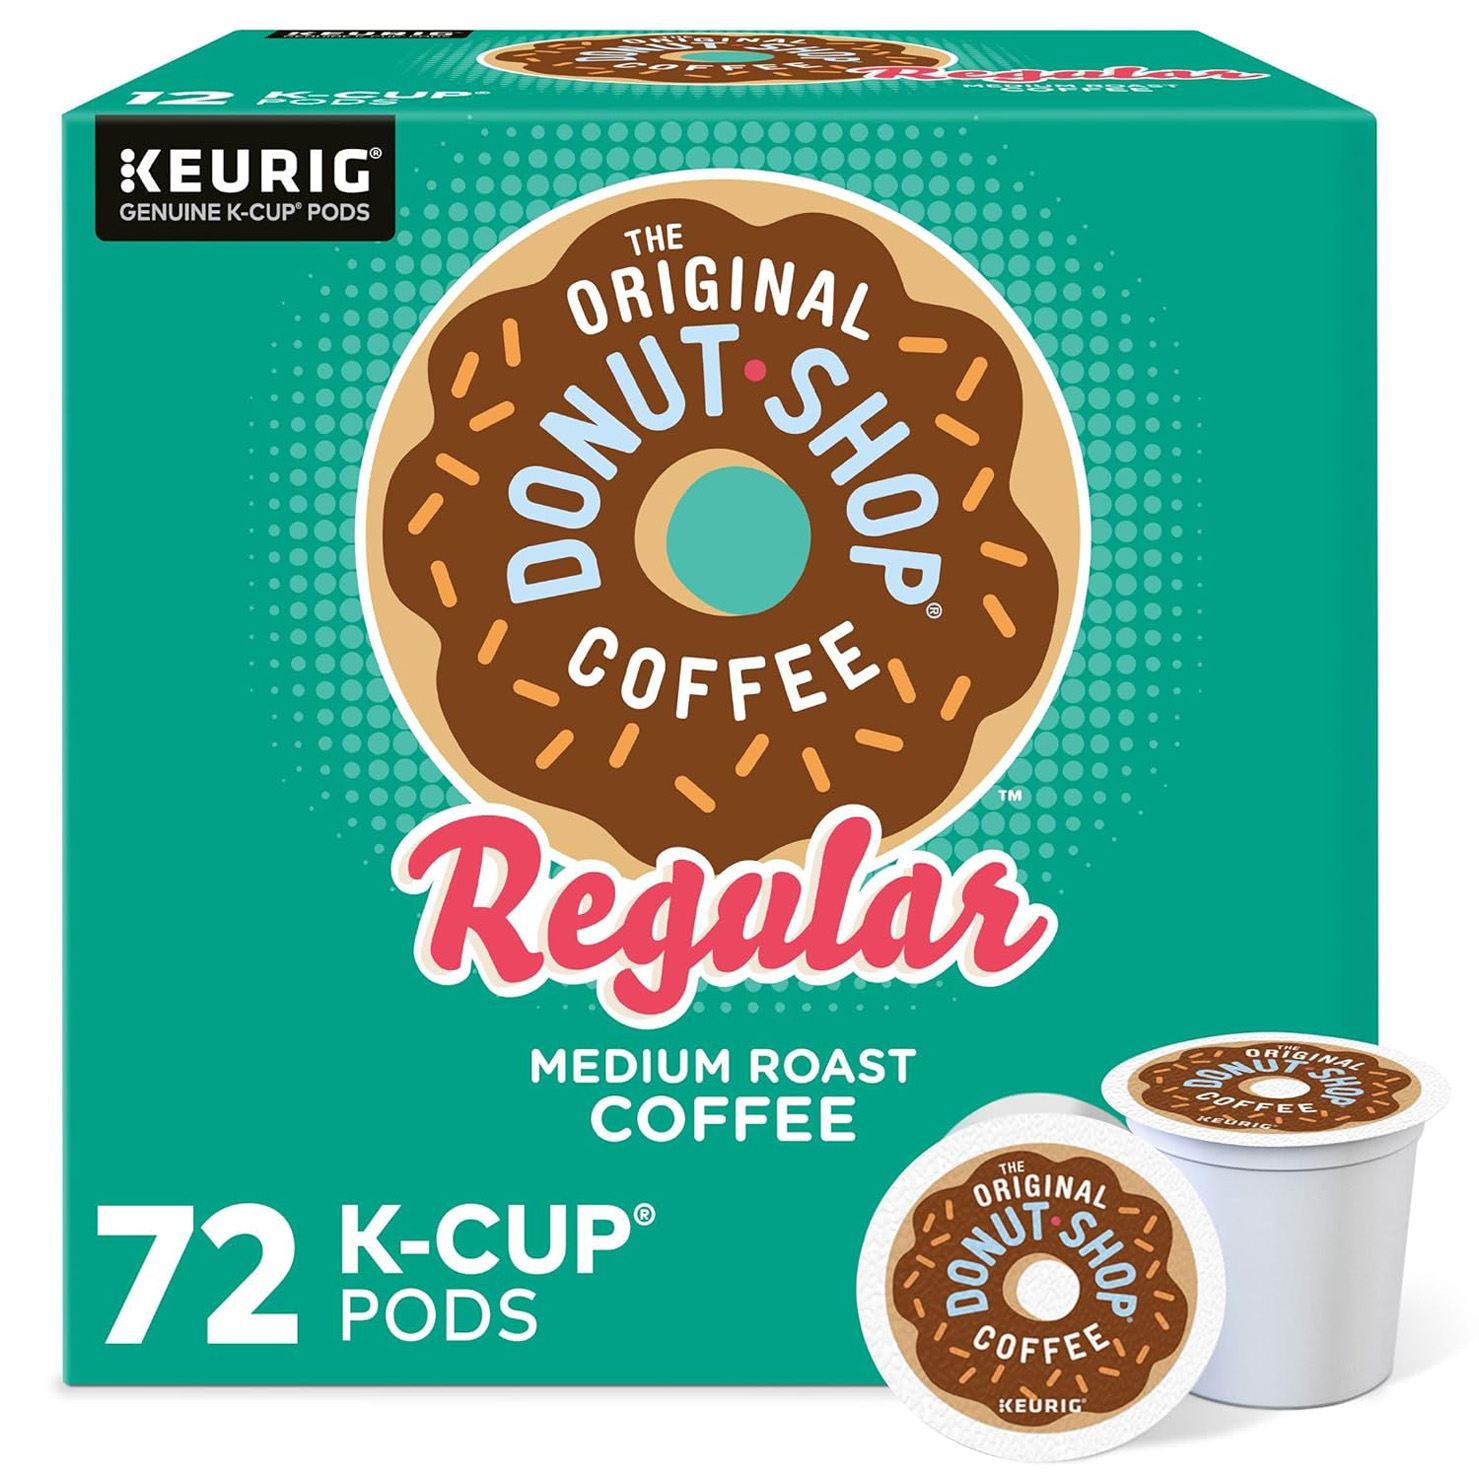 The Original Donut Shop Keurig Single-Serve K-Cup Pods, Regular Medium Roast Coffee, 12 Count